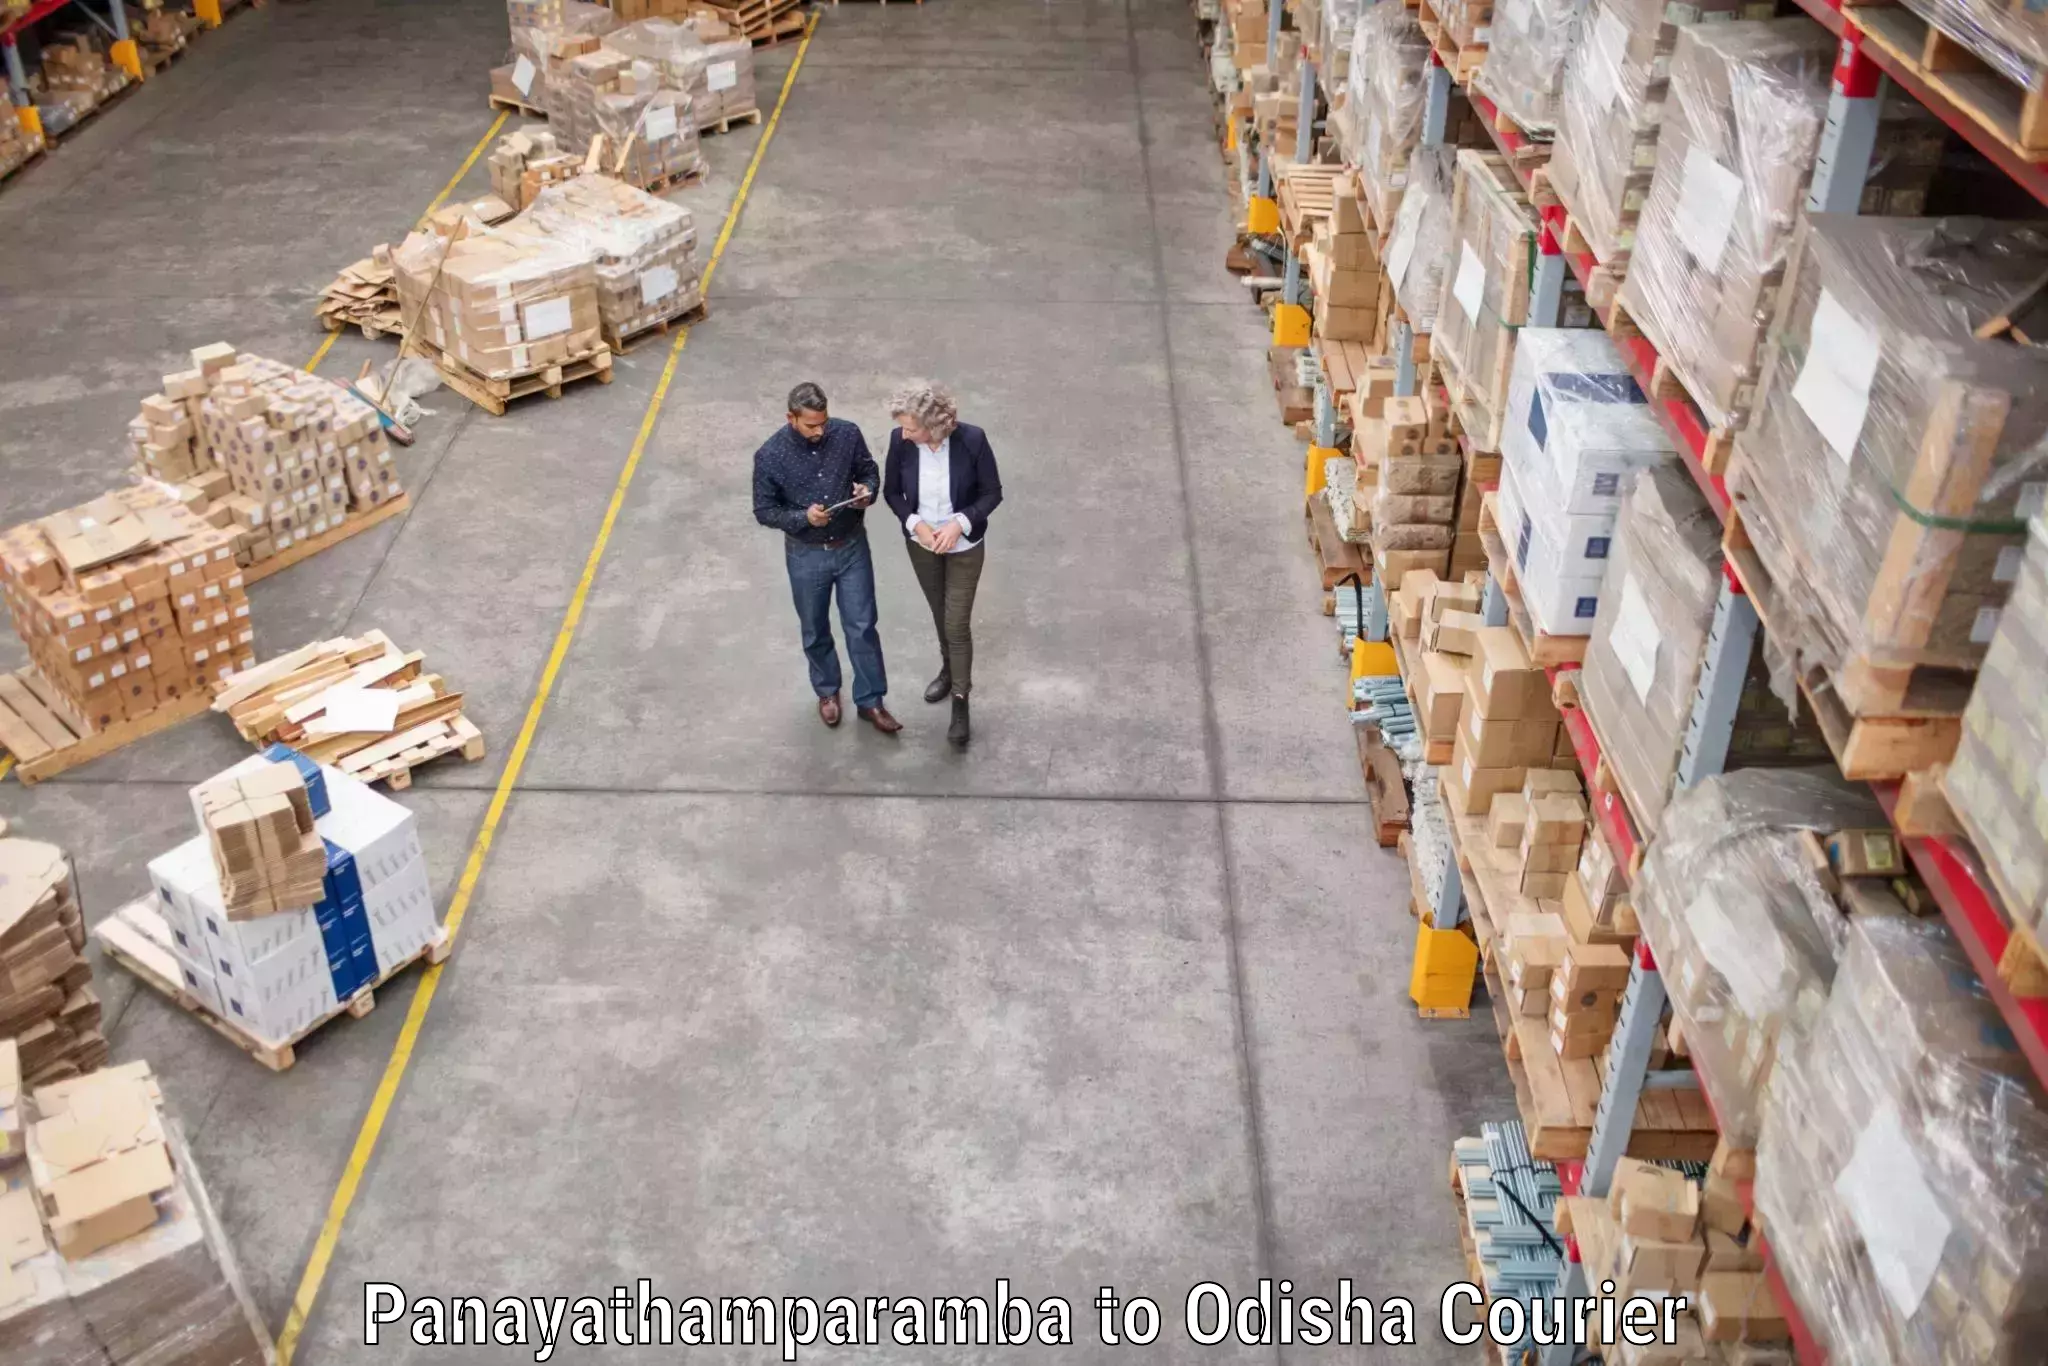 Quality moving company Panayathamparamba to Odisha